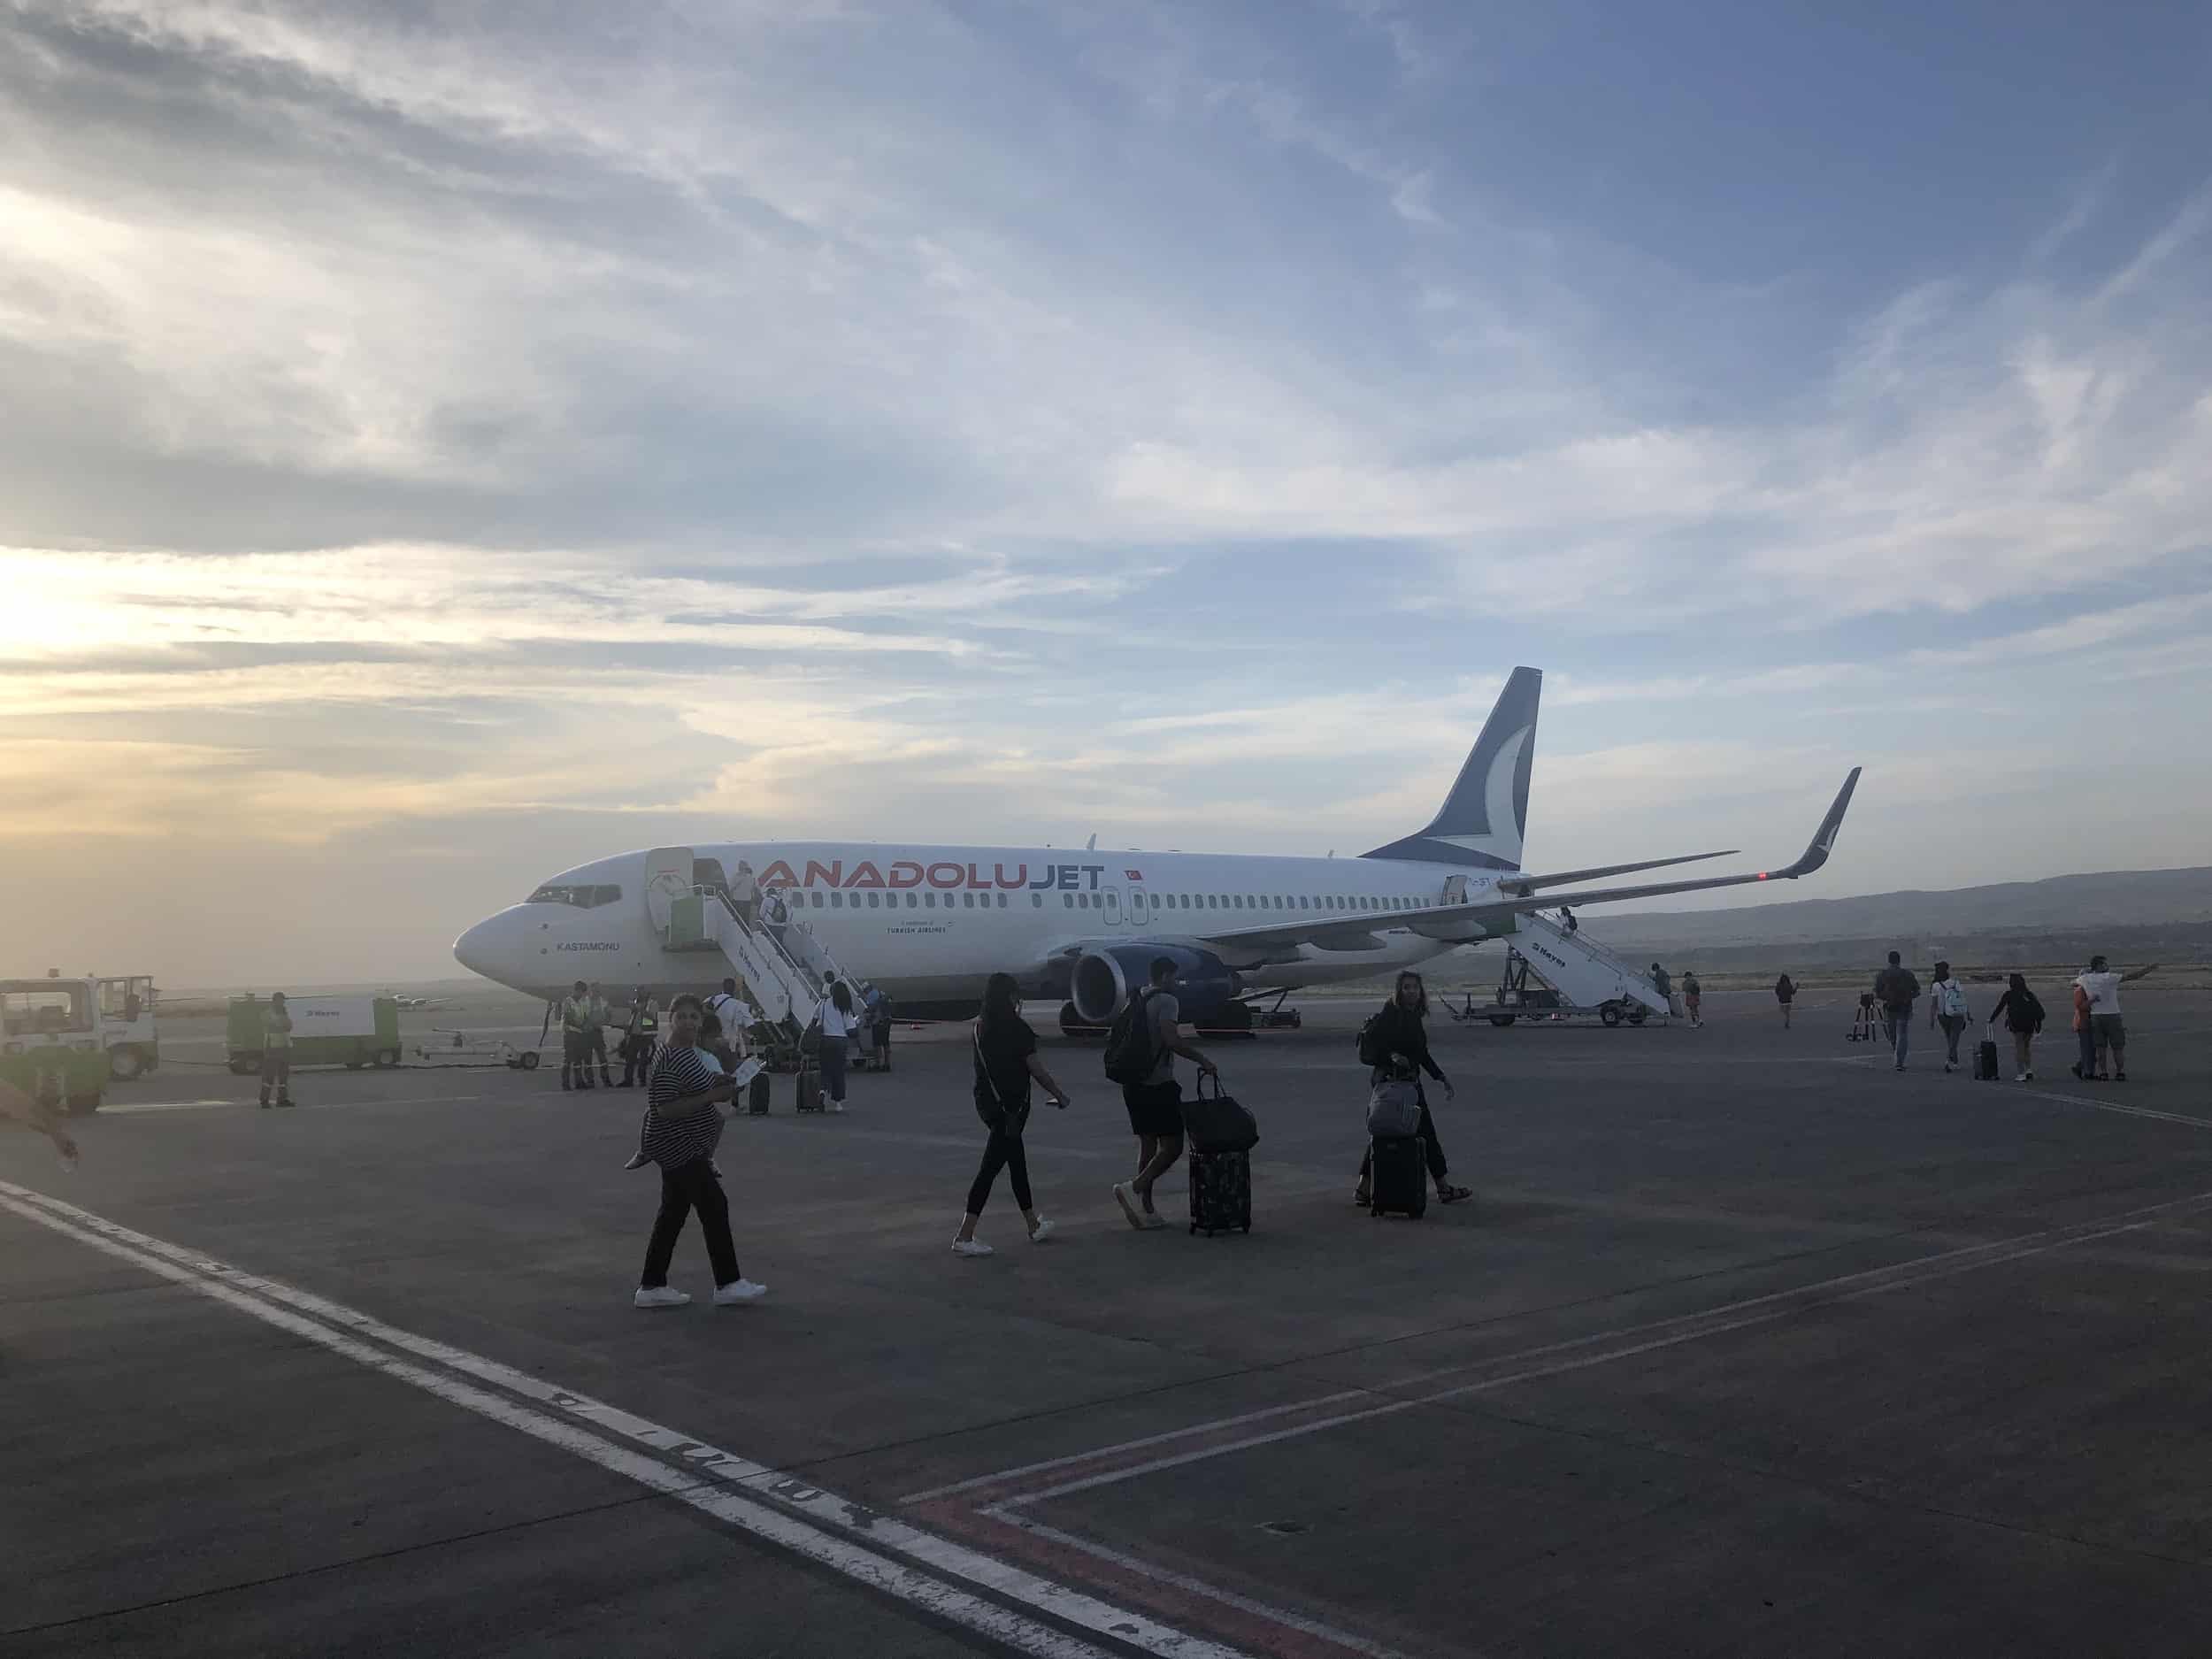 Boarding a plane at Nevşehir Kapadokya Airport